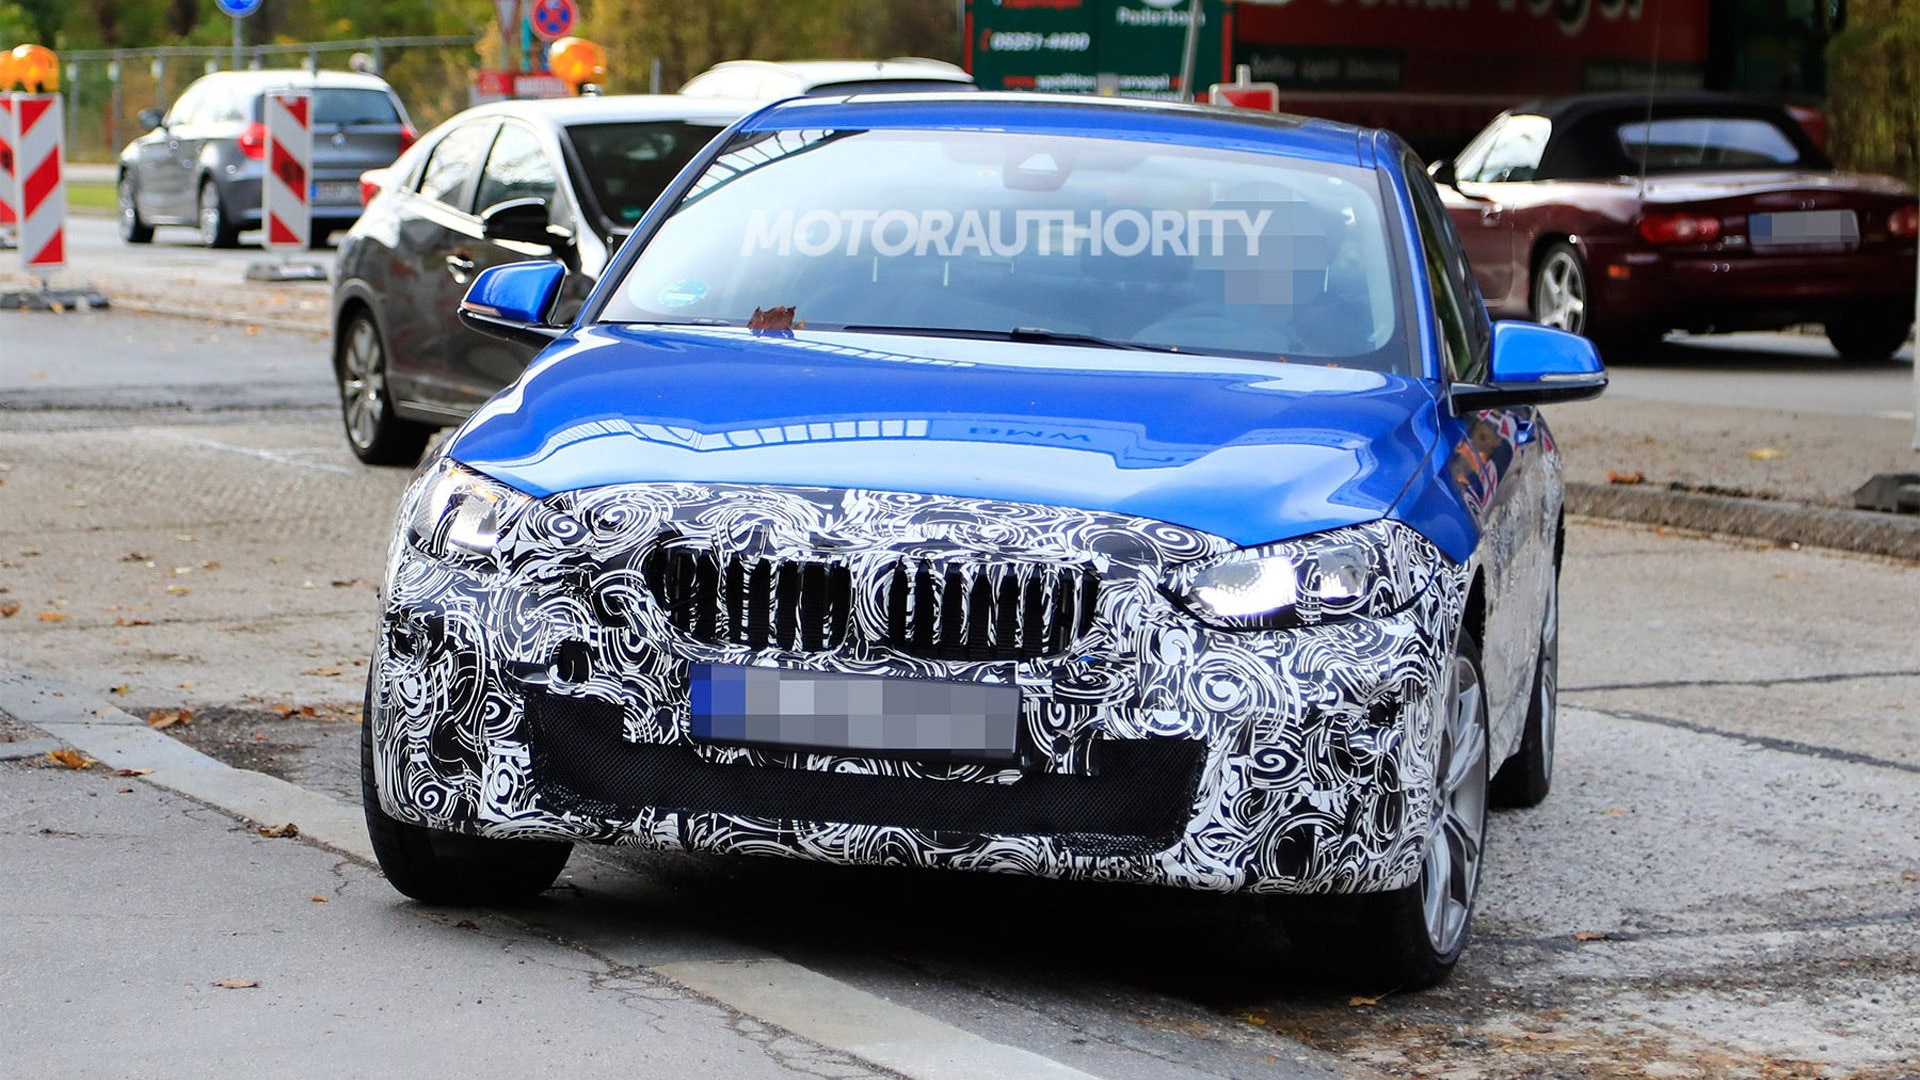 2020 BMW 1-Series facelift spy shots - Image via S. Baldauf/SB-Medien